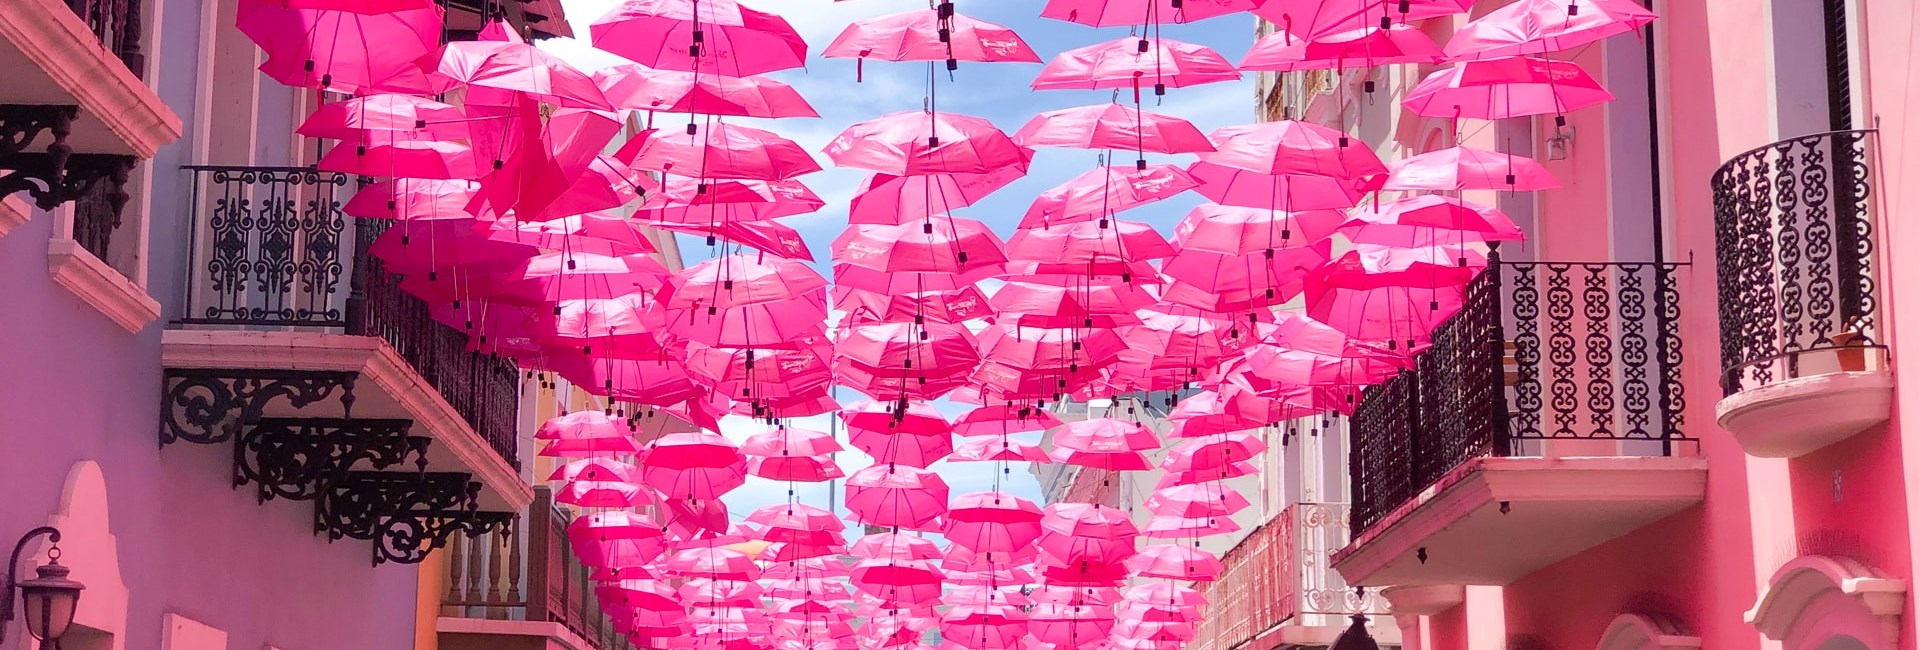 Pink umbrellas hanging over a street in San Juan